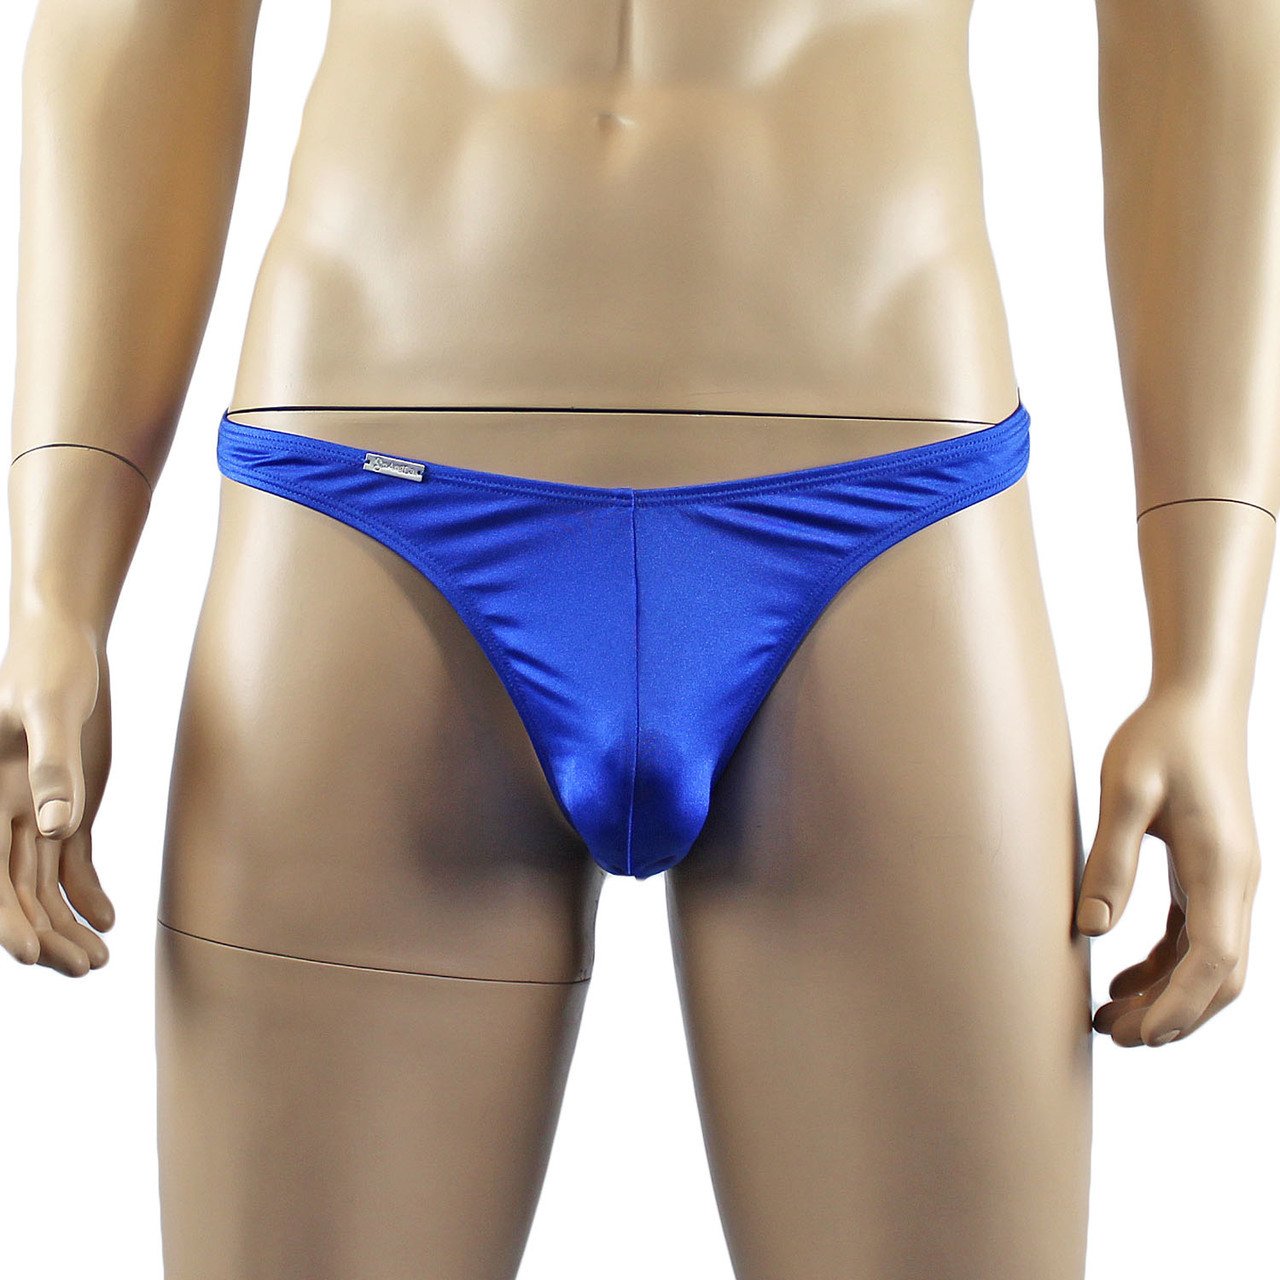 Mens Lycra G string Thong Underwear Lingerie